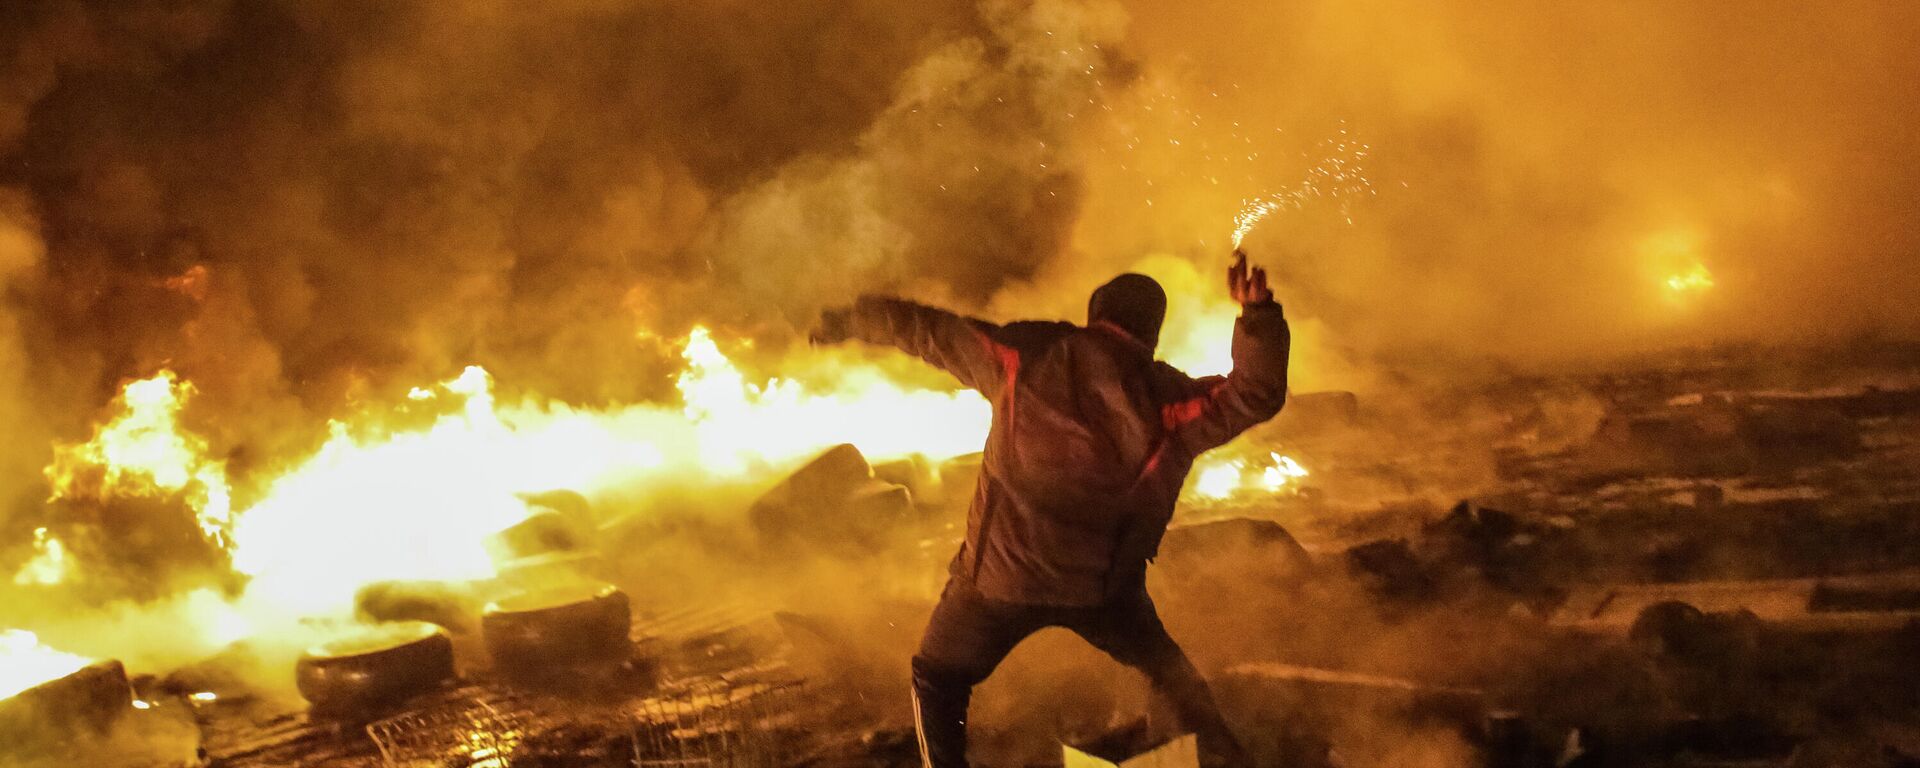 Столкновения в центре Киева. 2014 год  - Sputnik Moldova, 1920, 13.09.2021